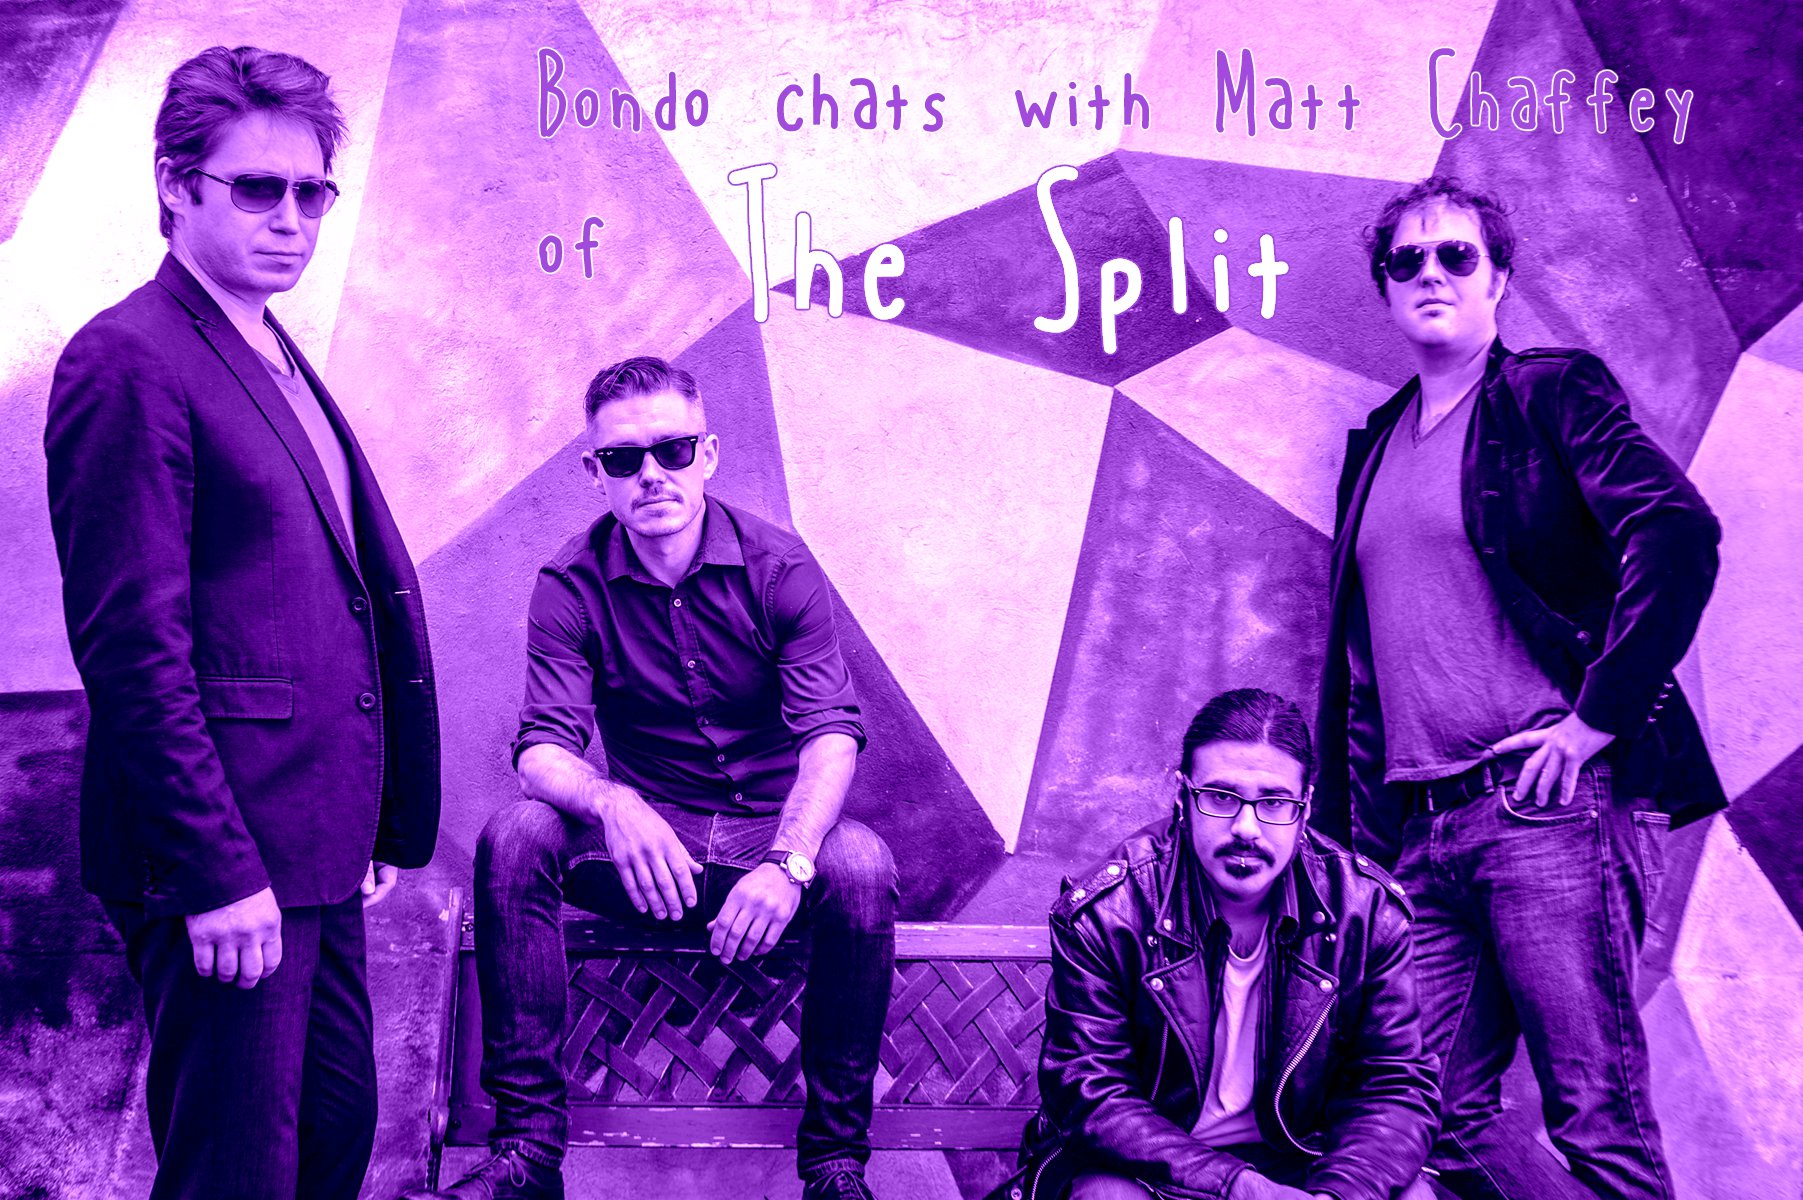 CHSR-FM 97.9 | Bondo chats with Matt Chaffey of The Split – Interview